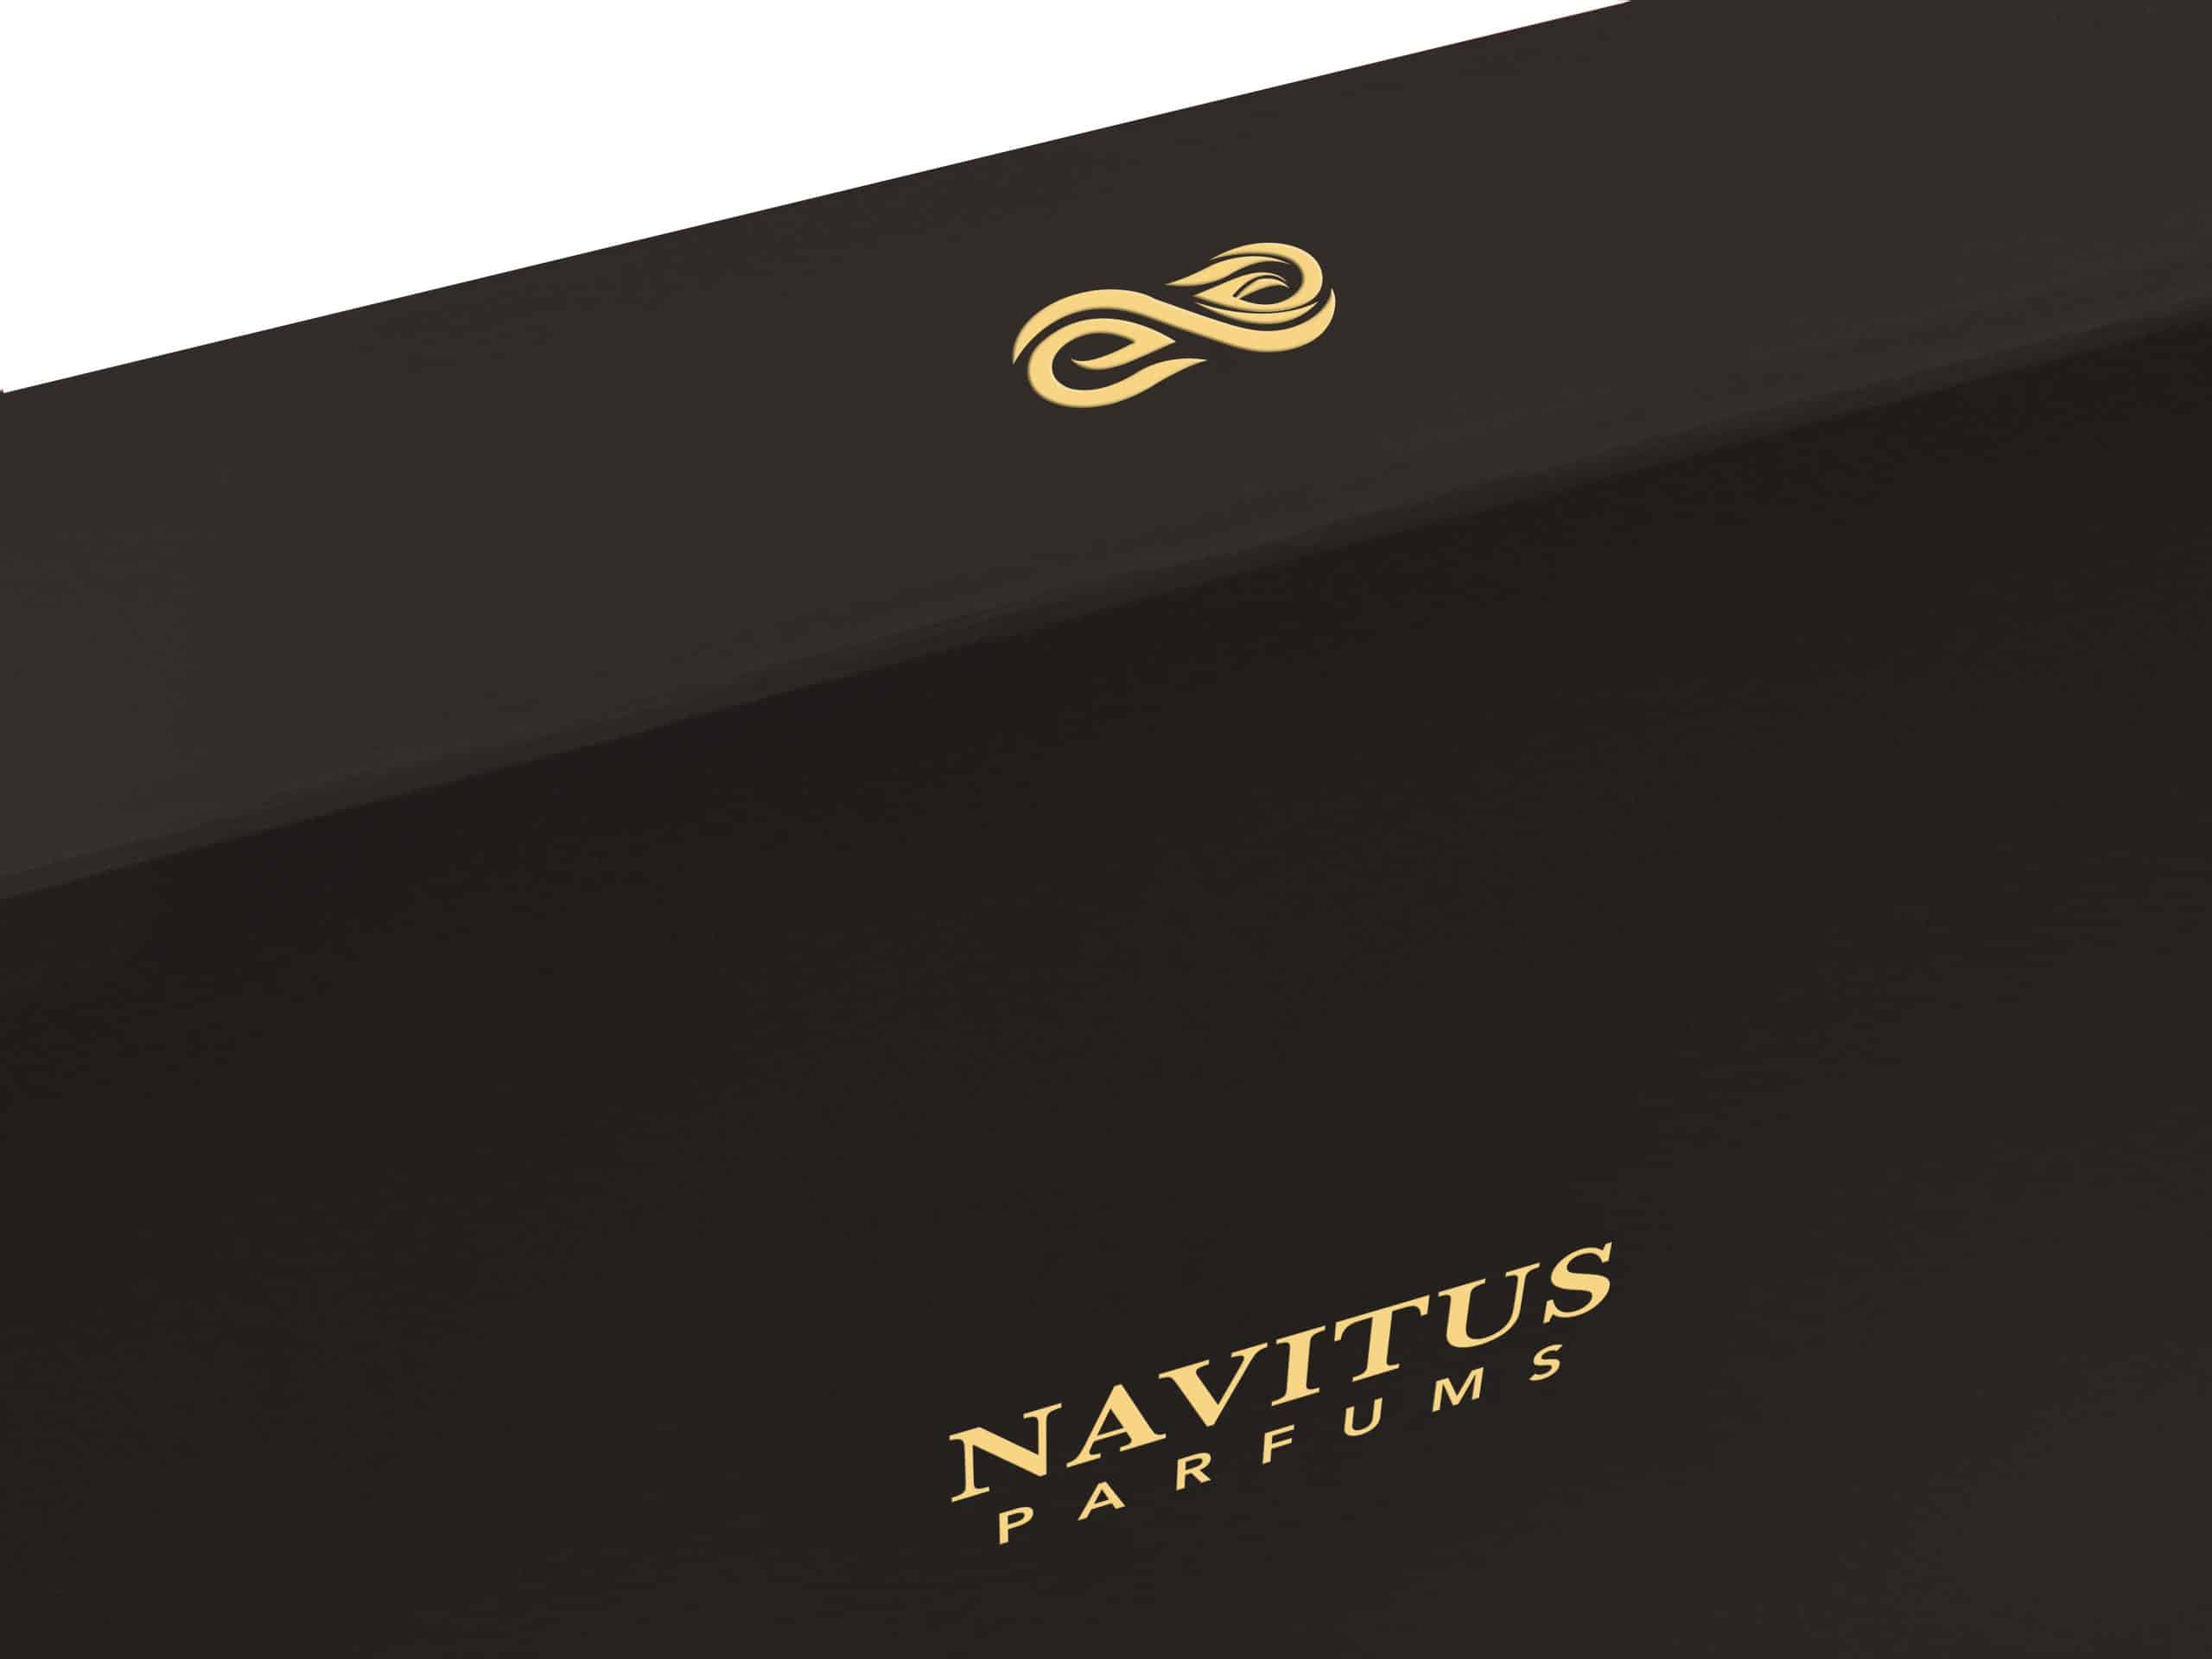 Navitus Parfums-Iconic Discovery Set; 15-5ml samples